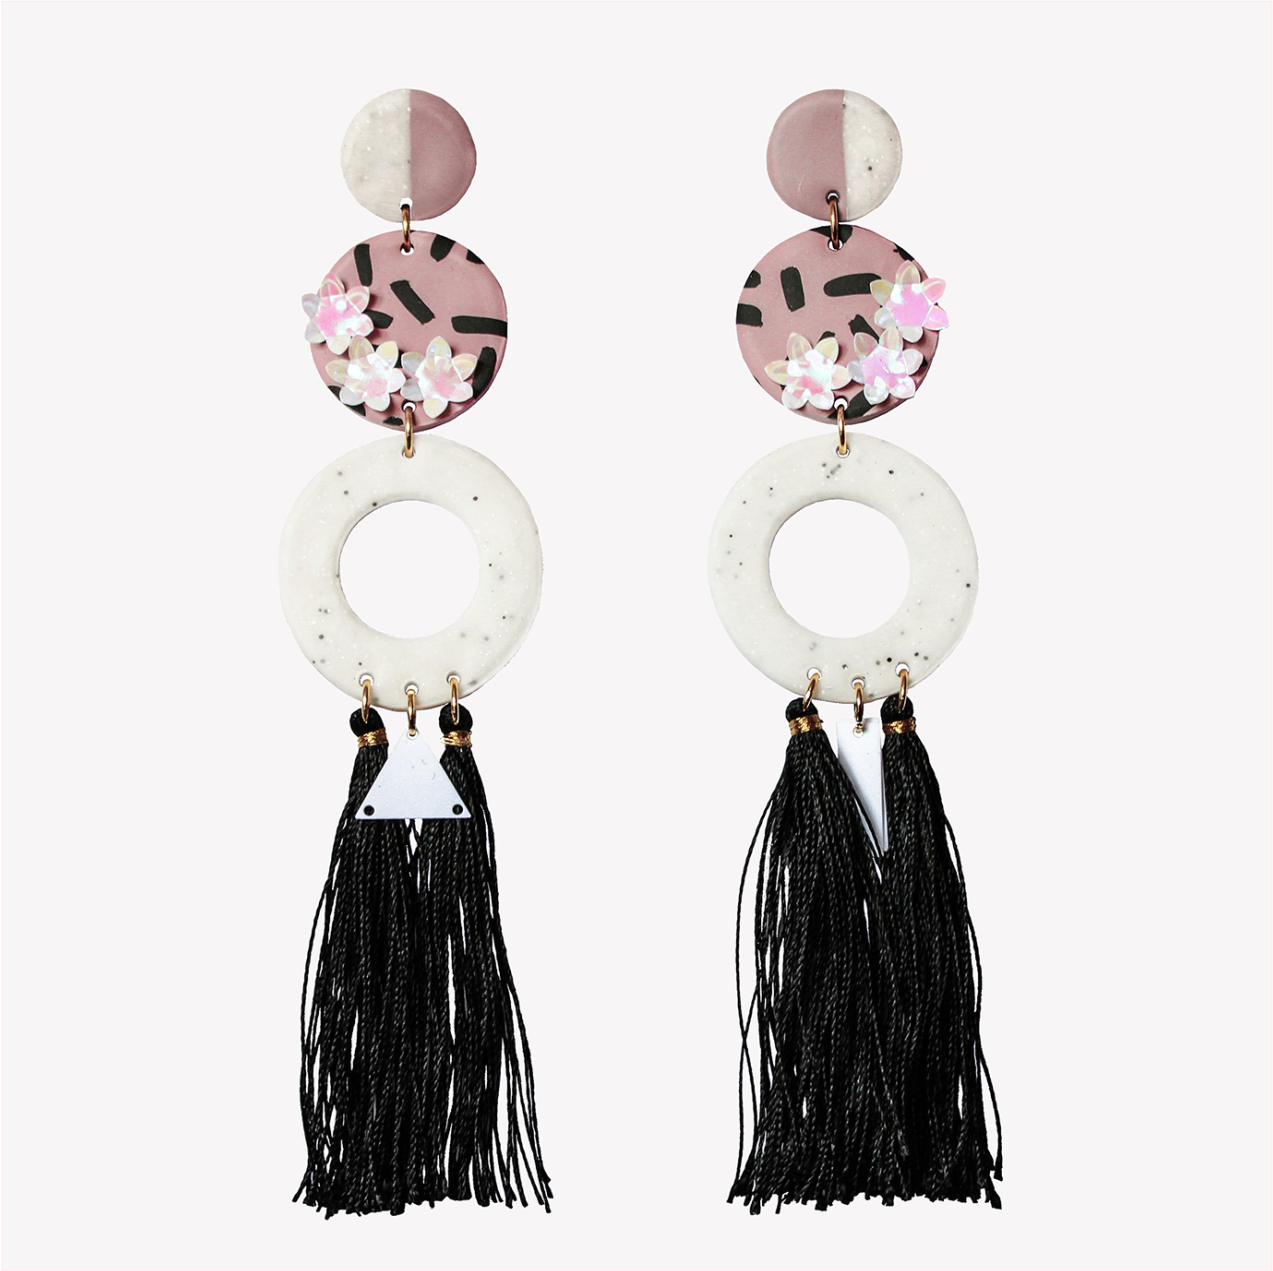 Long tassel fimo earrings with sequin flowers